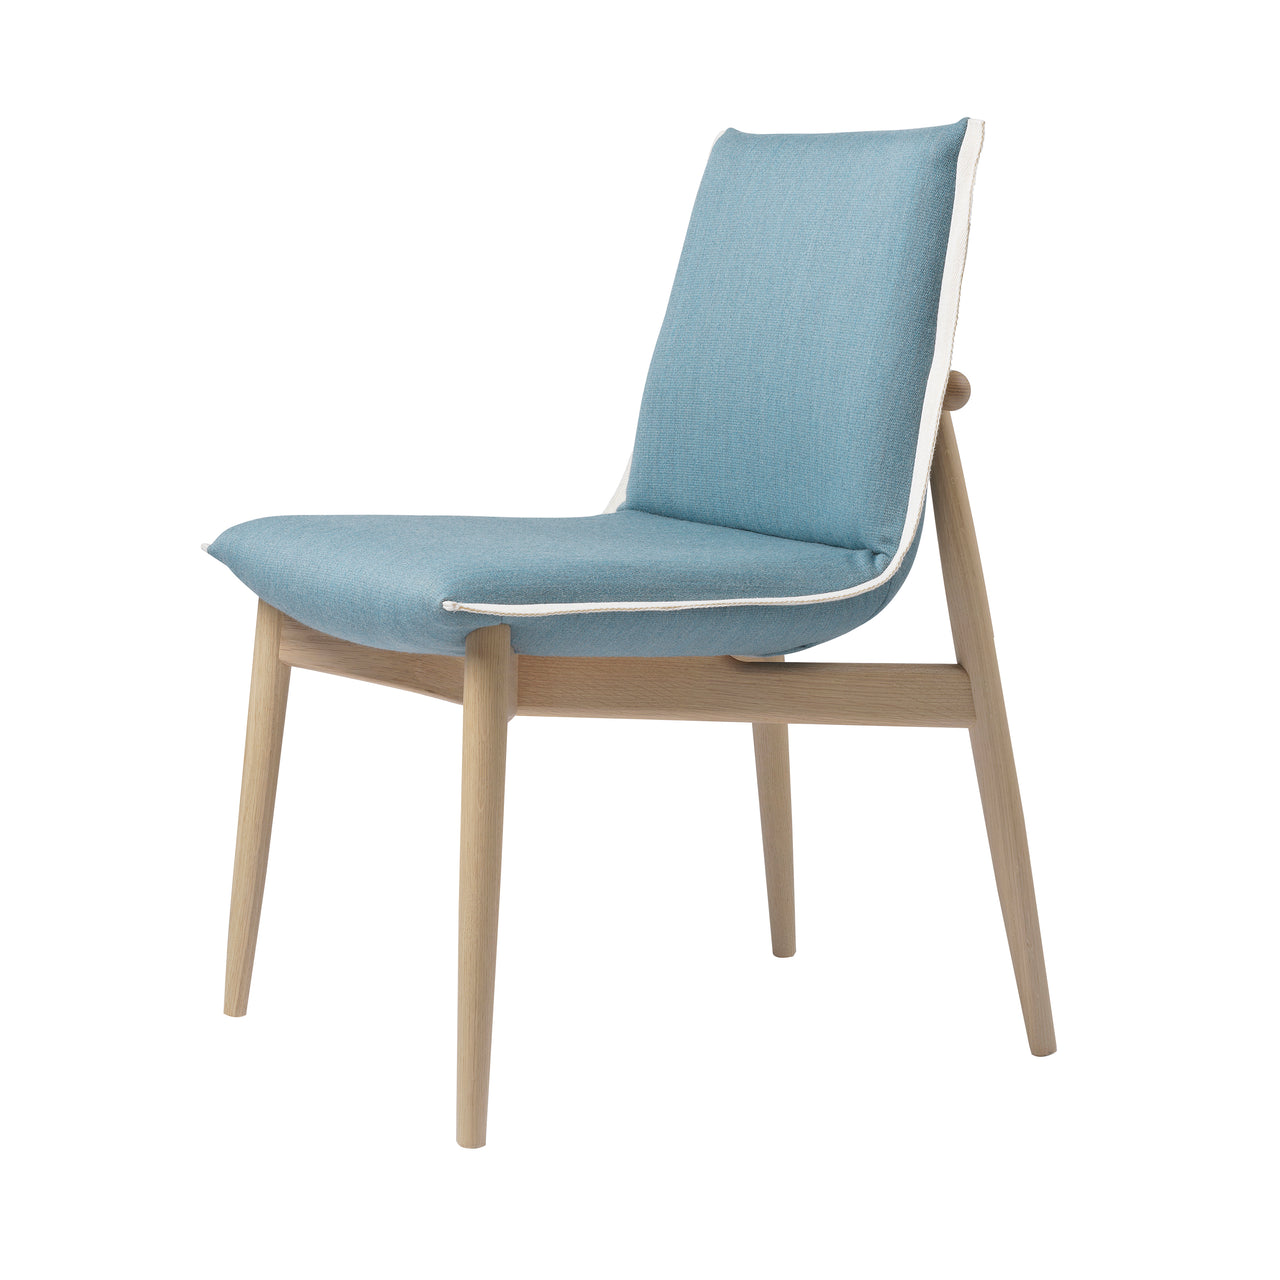 E004 Embrace Chair: Natural Edging Strip + White Oiled Oak